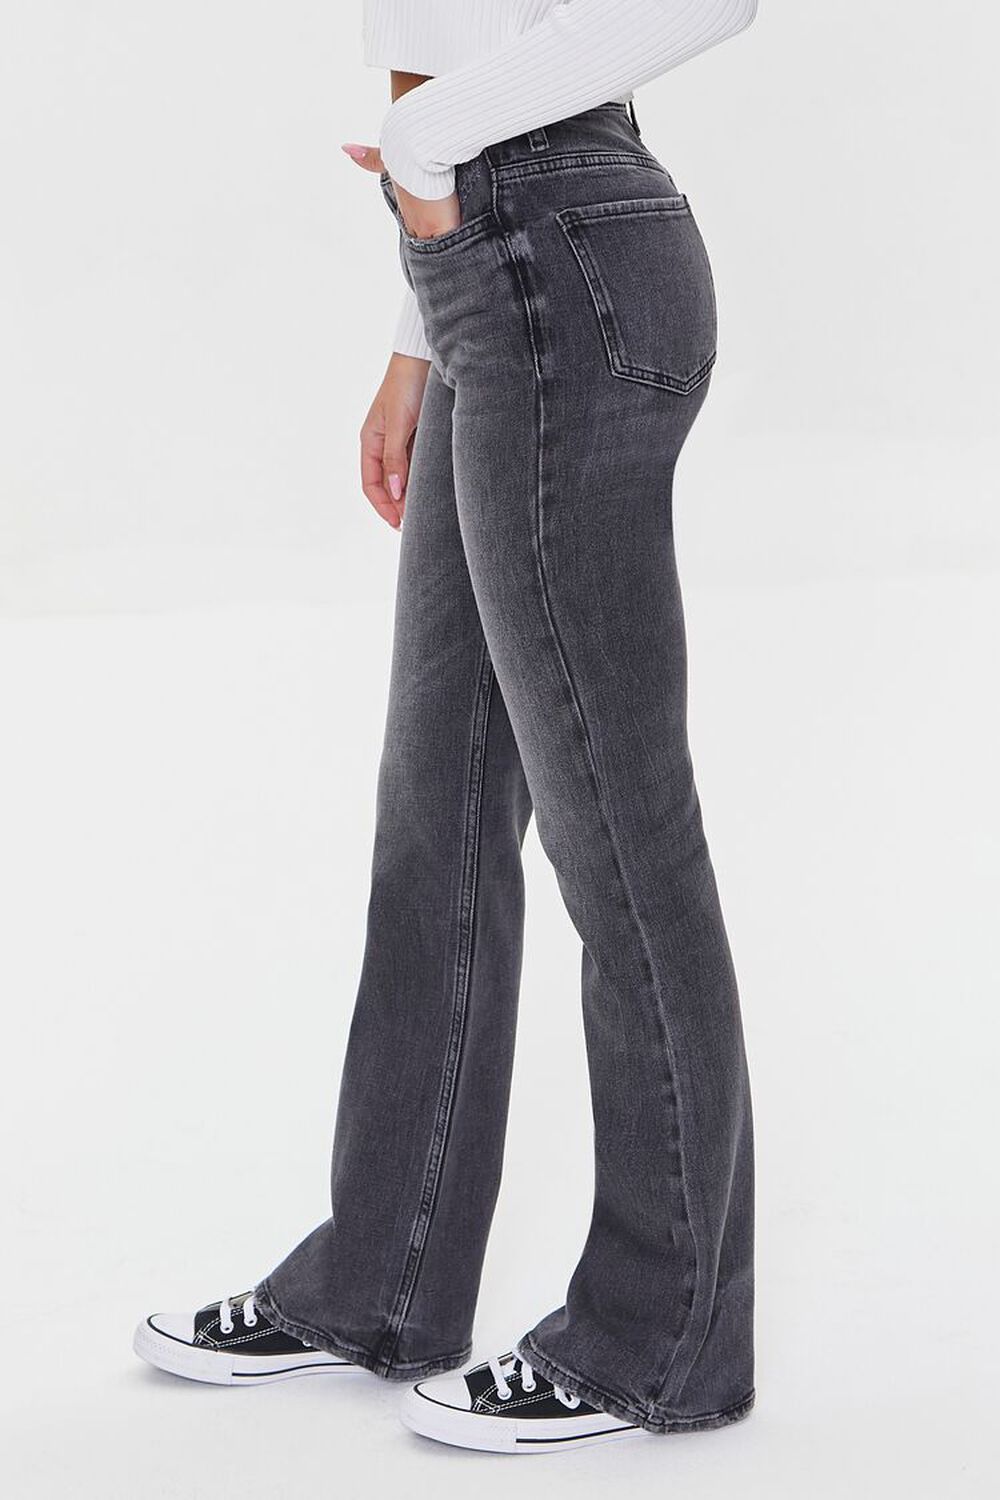 BLACK Hemp 4% High-Rise Flare Jeans, image 3